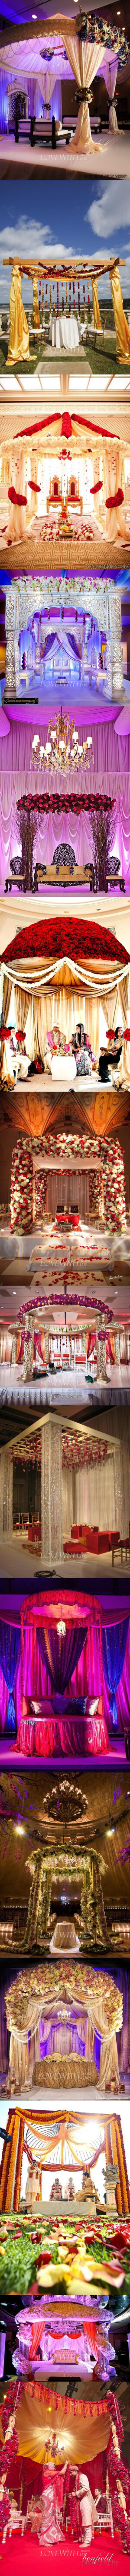 #婚礼布置#15组高端大气上档次的印度婚礼仪式花亭 更多: http://www.lovewith.me/share/detail/all/29238